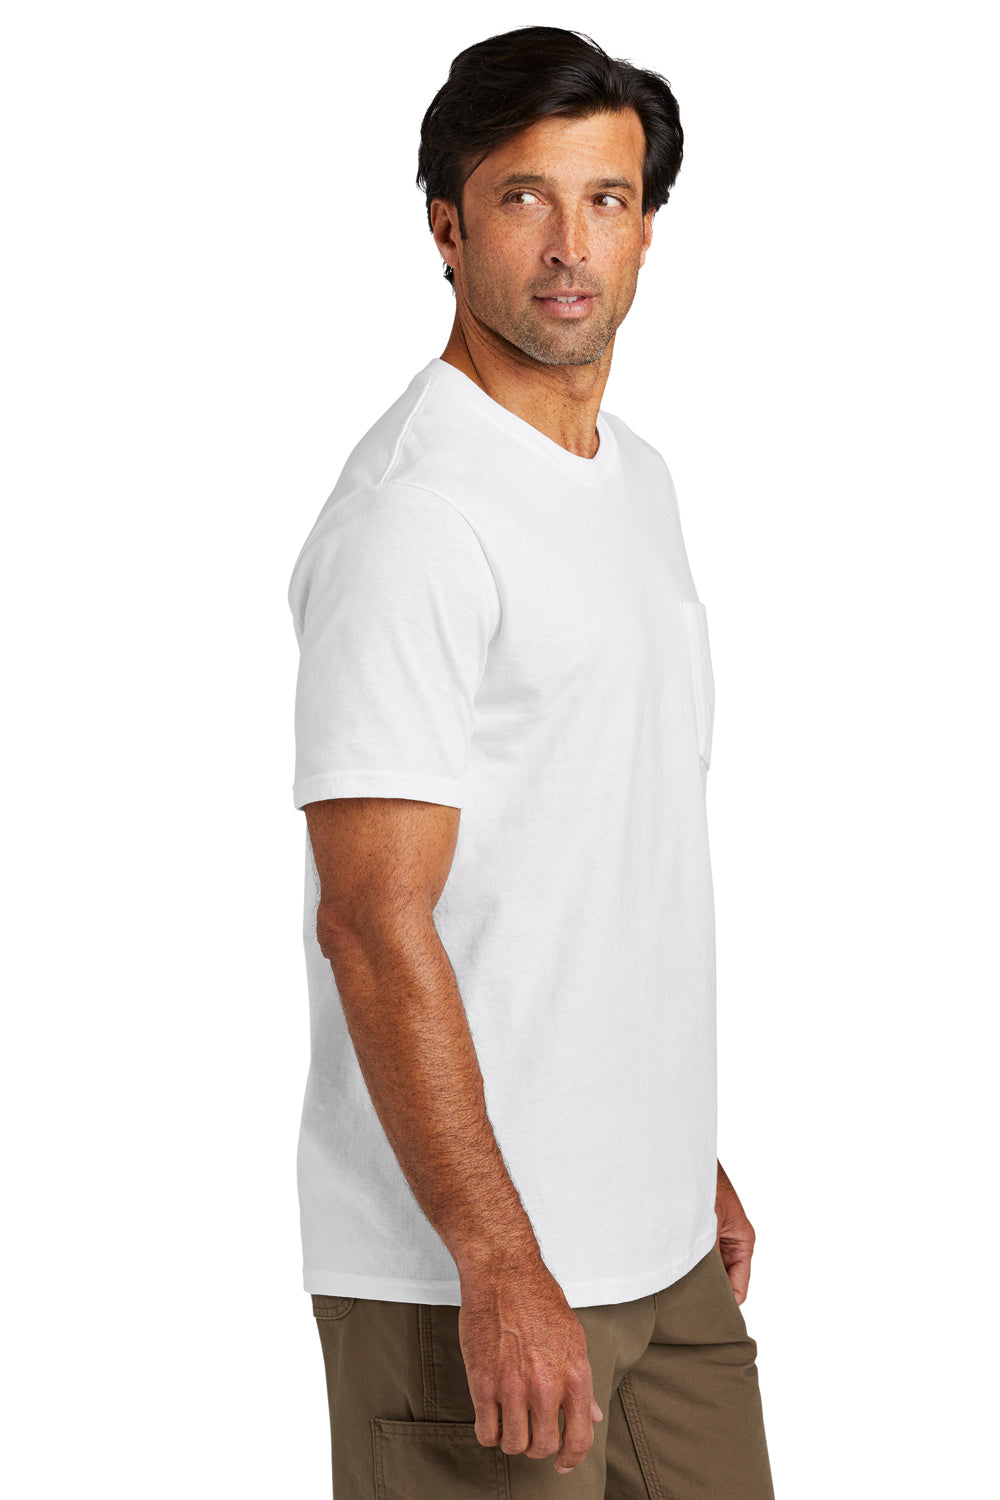 Volunteer Knitwear VL100P USA Made All American Short Sleeve Crewneck T-Shirt w/ Pocket White Side